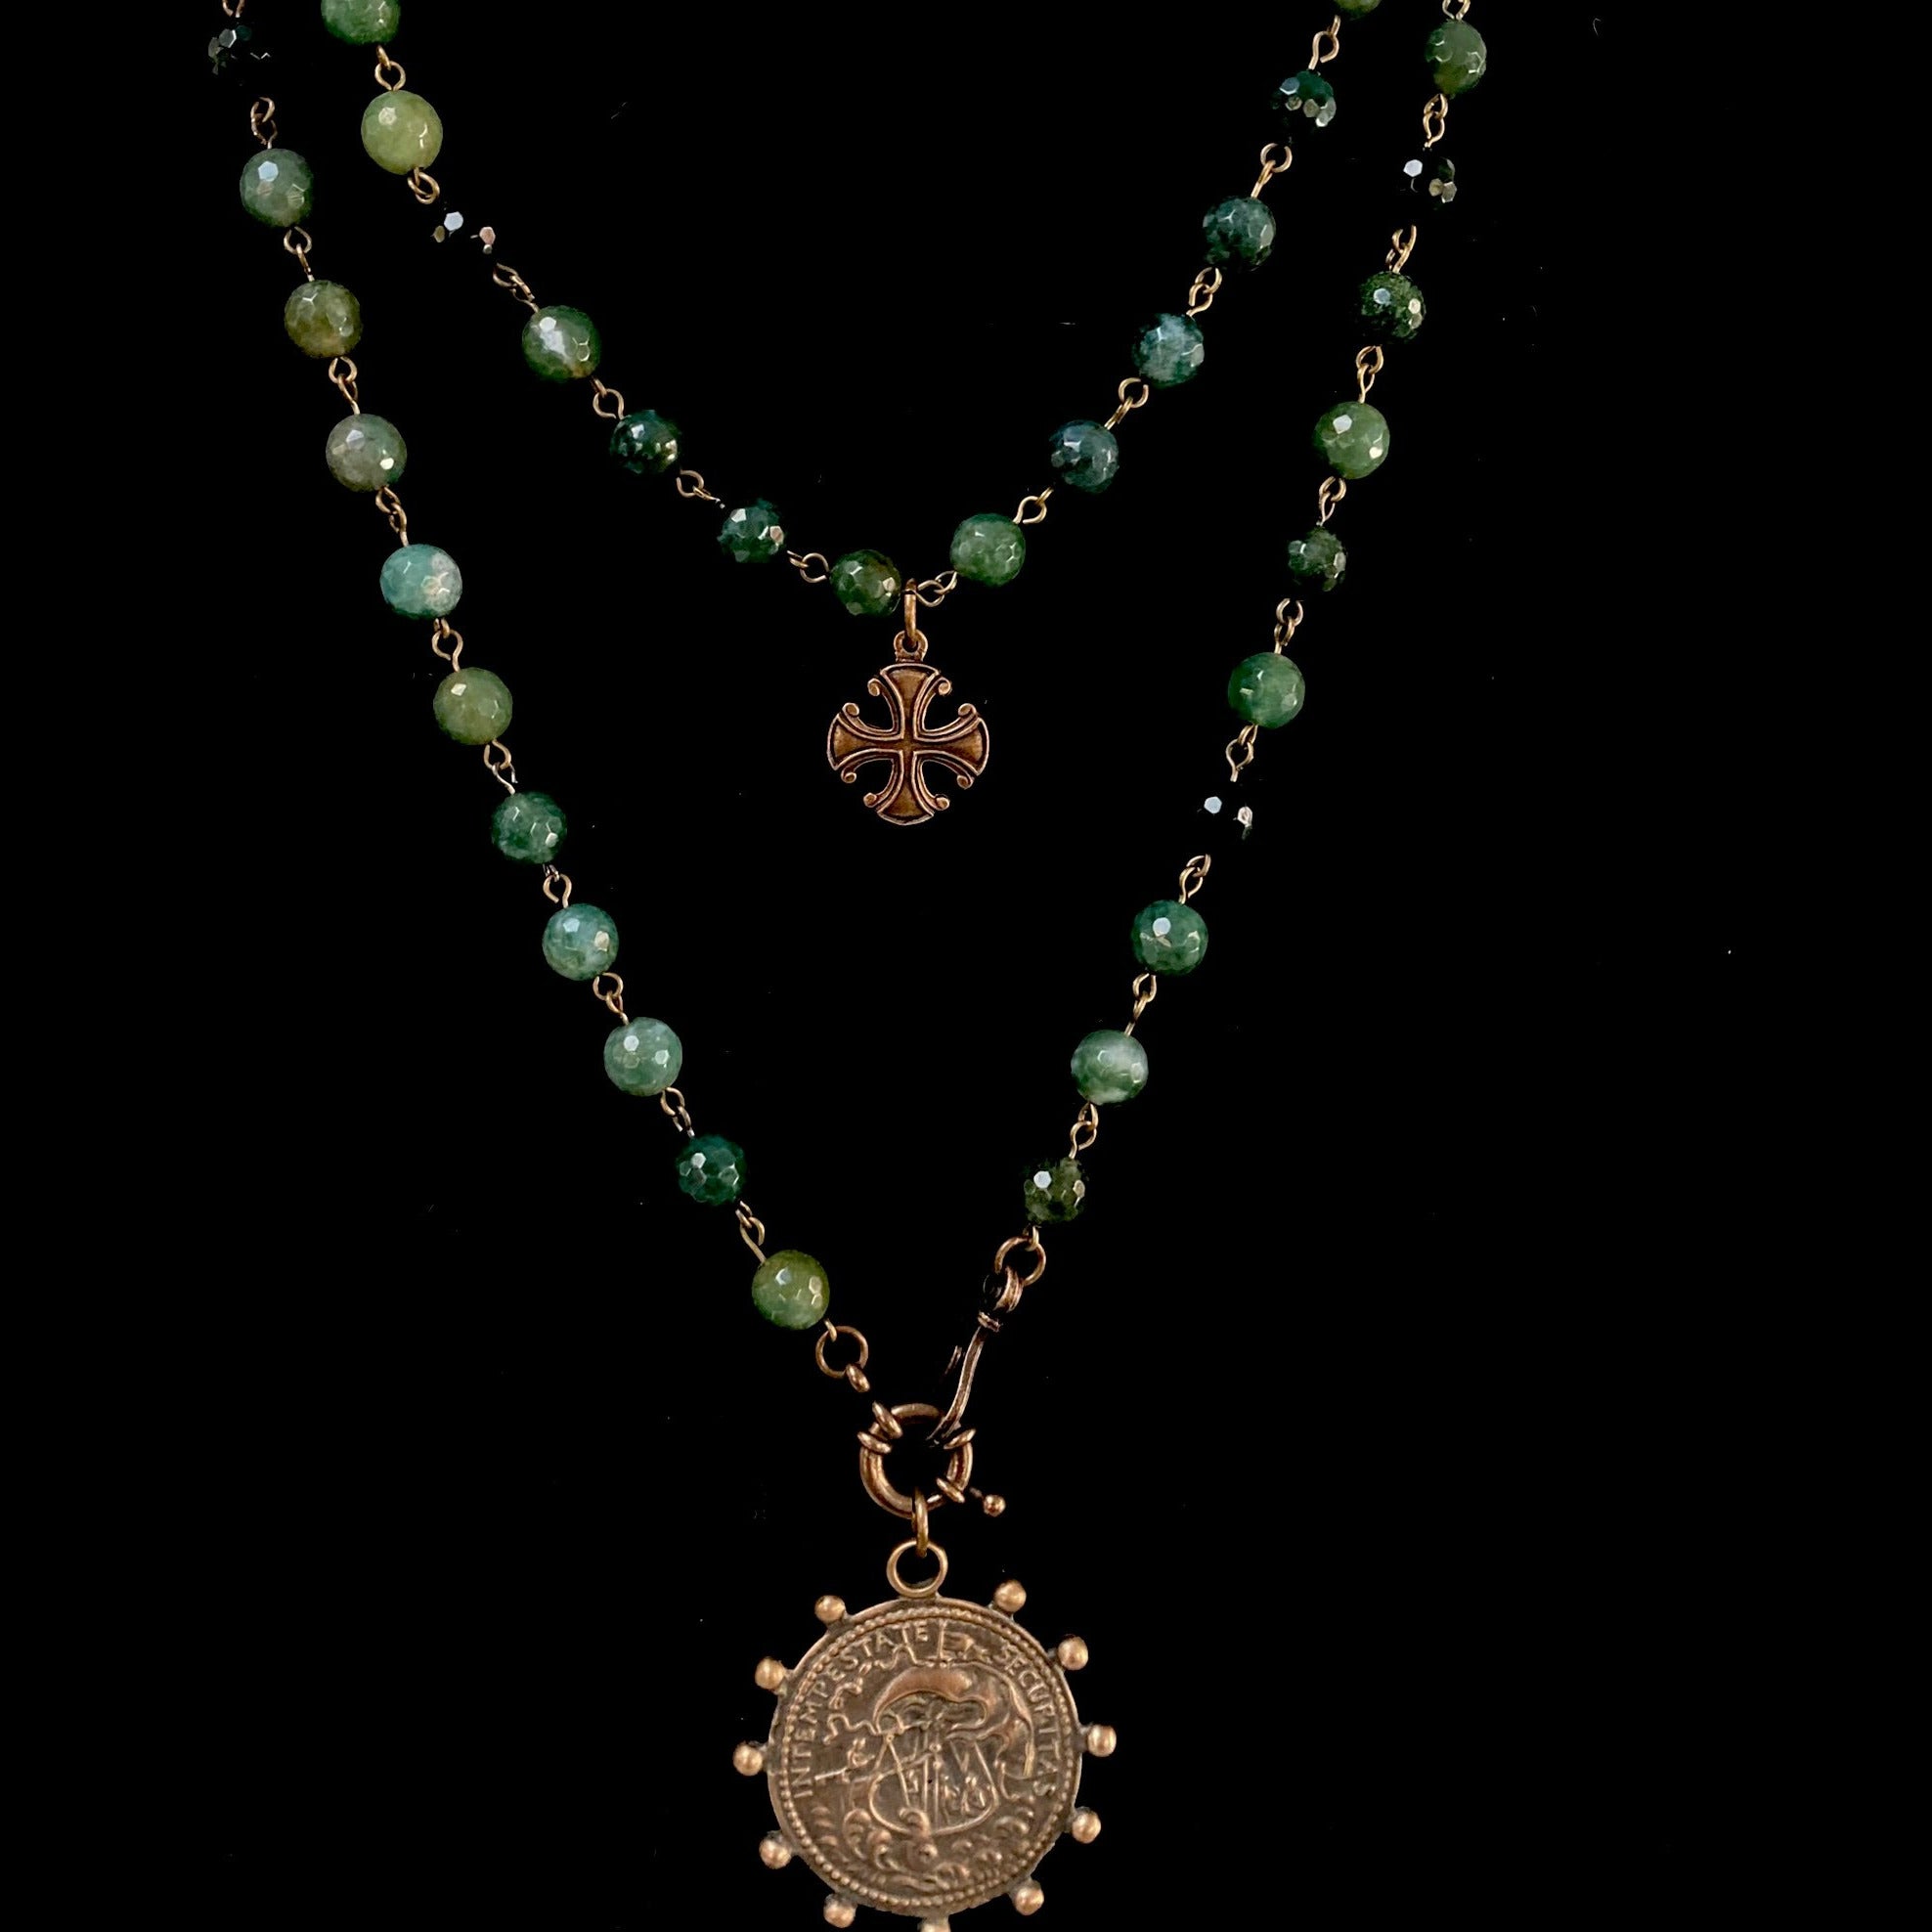 St. George the Patron Saint of Equestrians Necklace/Wrap Bracelet in Mystical Moss Agate